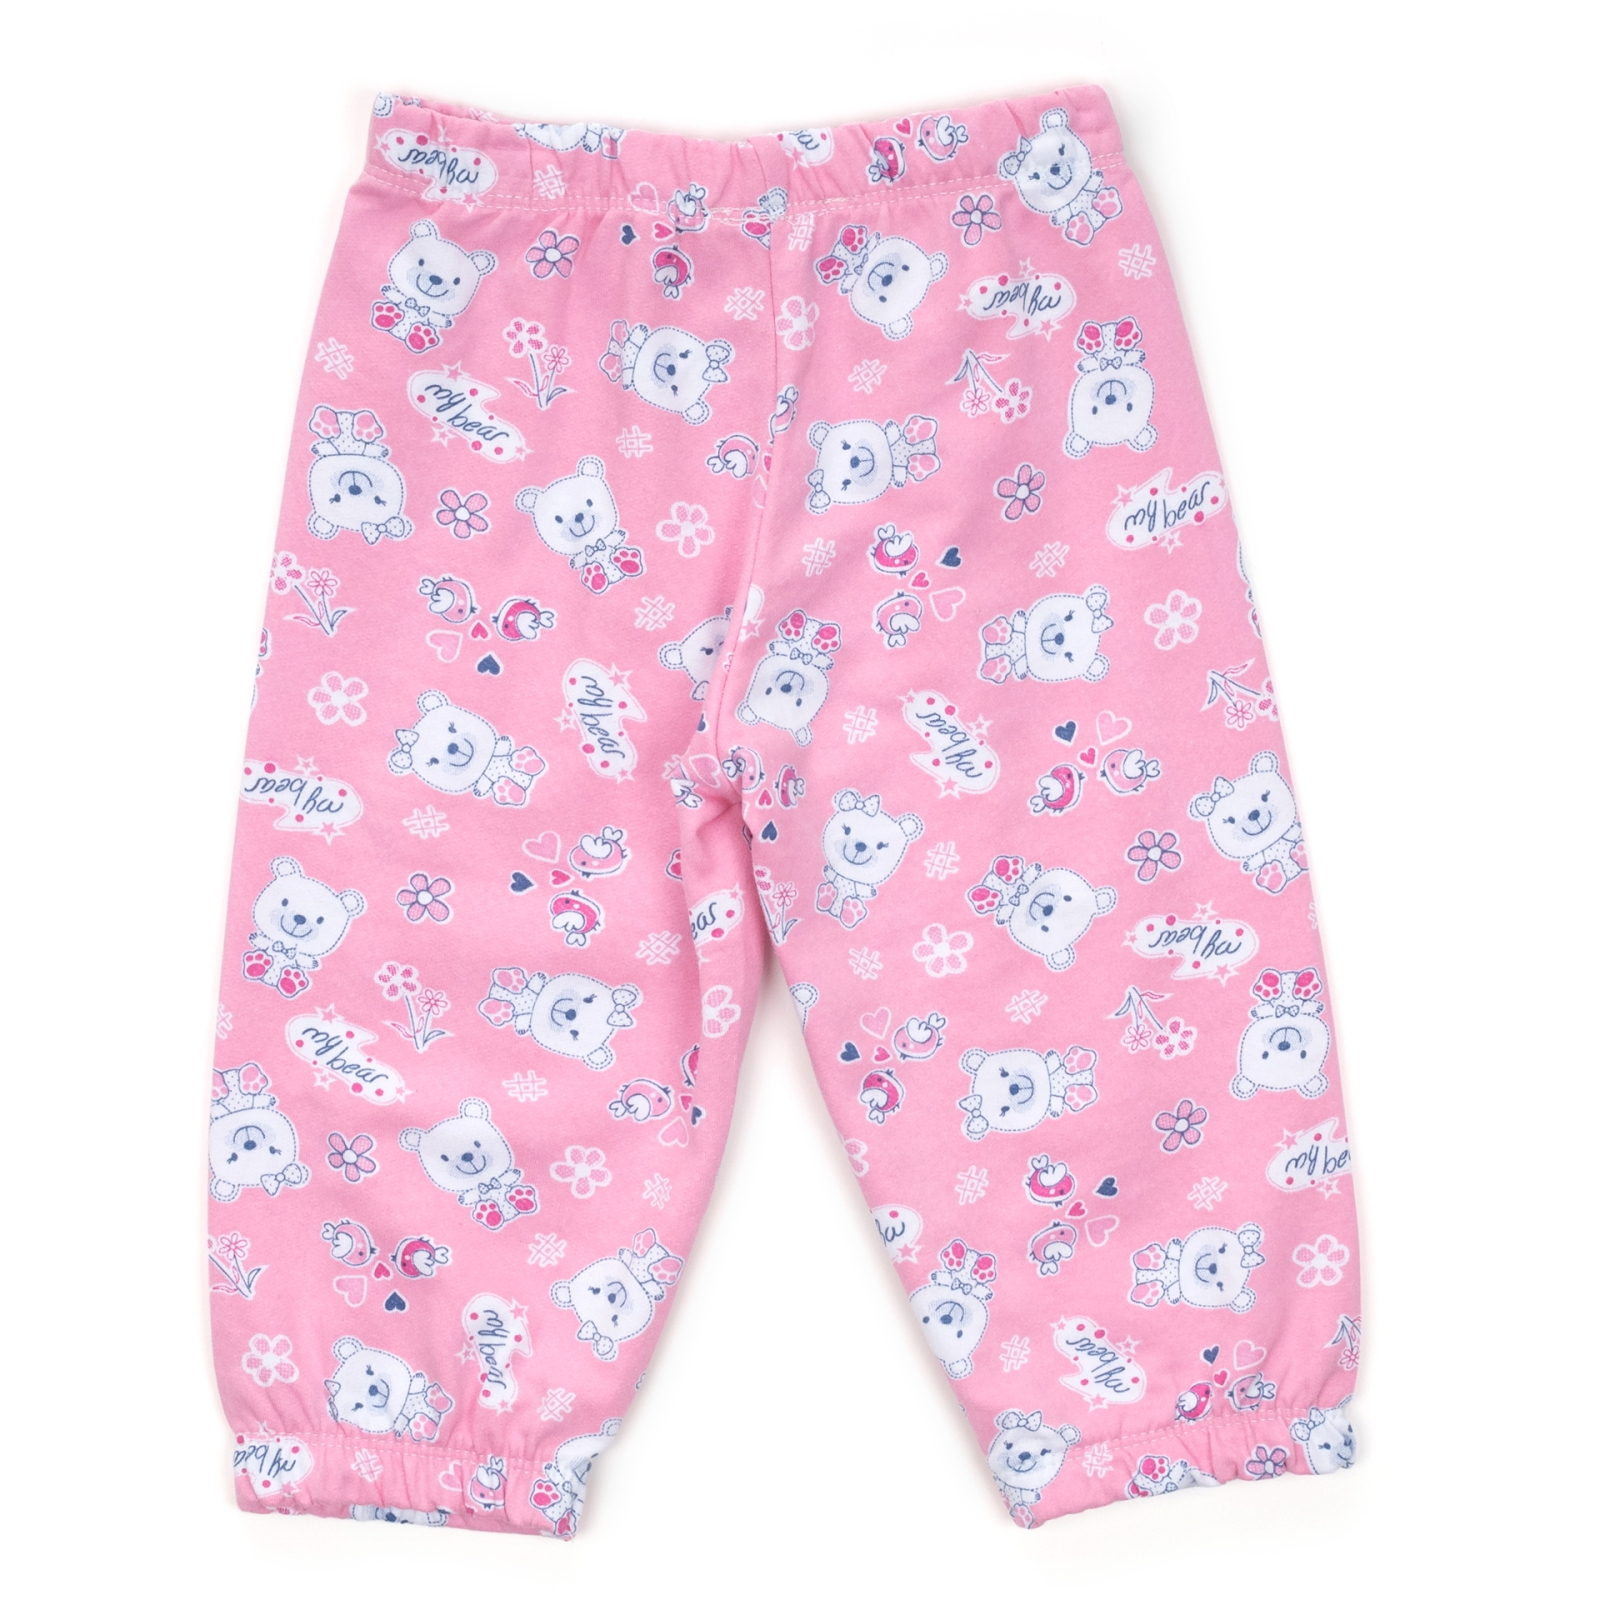 Пижама Breeze с мишками (8382-104G-pink) изображение 6